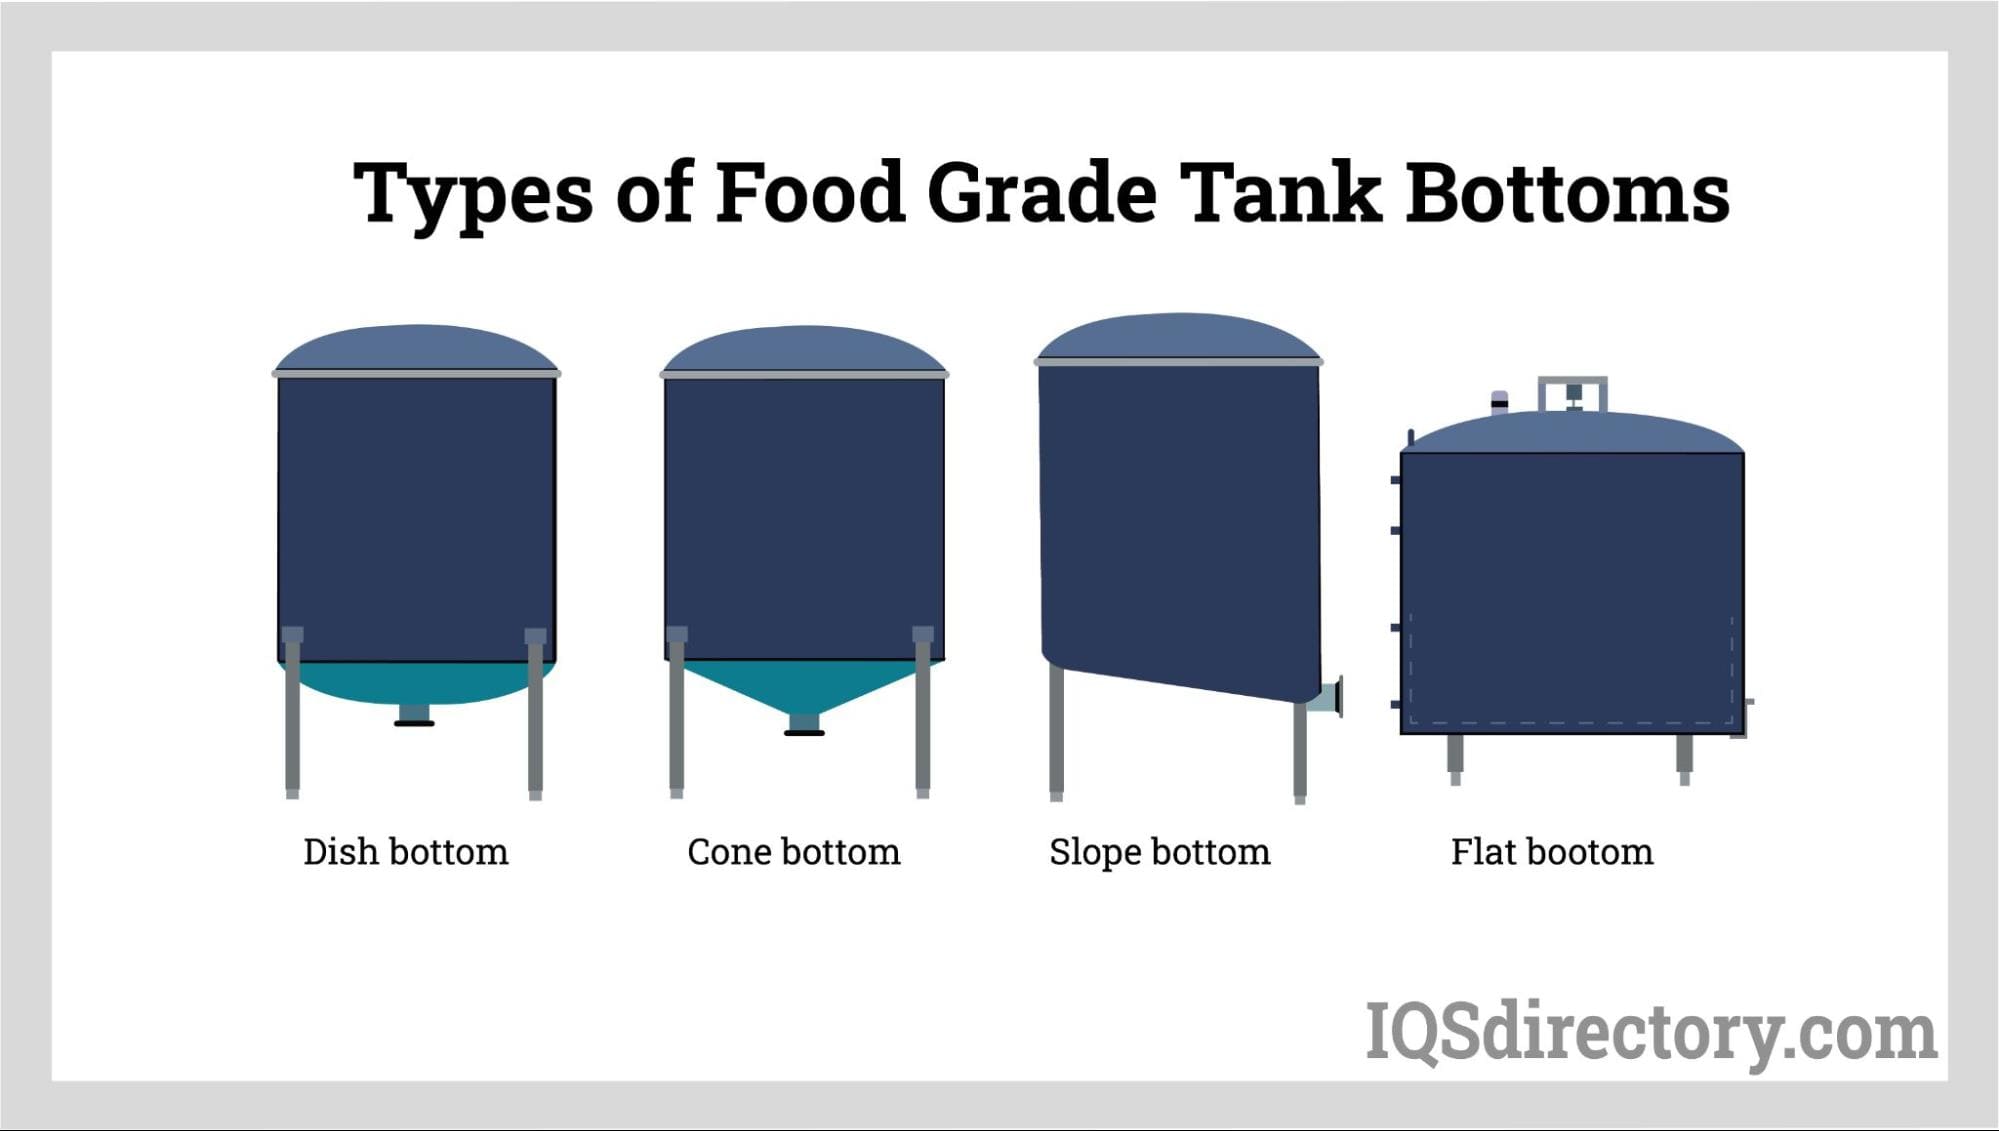 Types of Food Grade Tank Bottoms